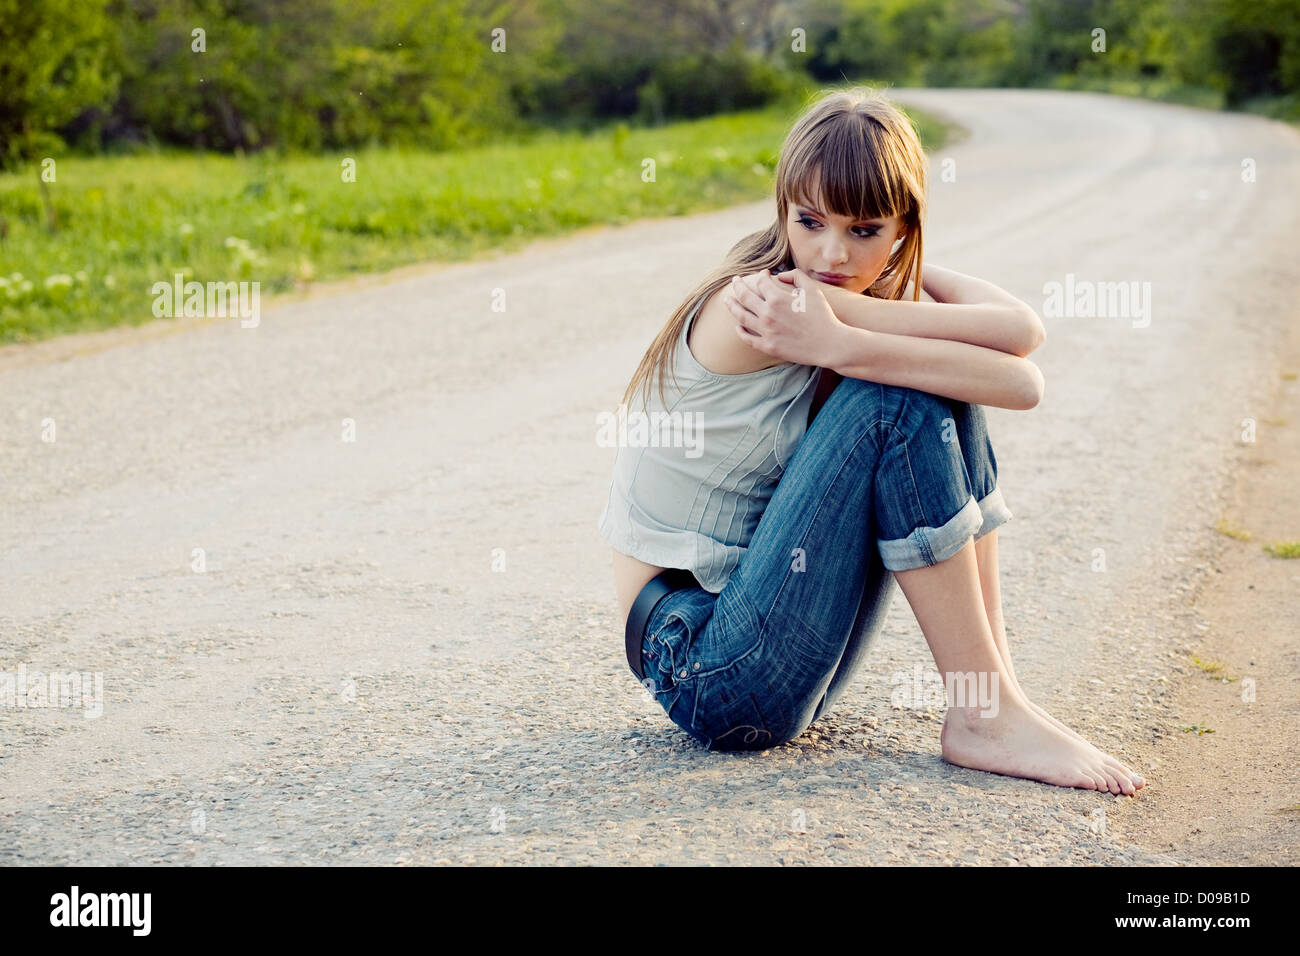 Sad girl sitting down on road Stock Photo - Alamy